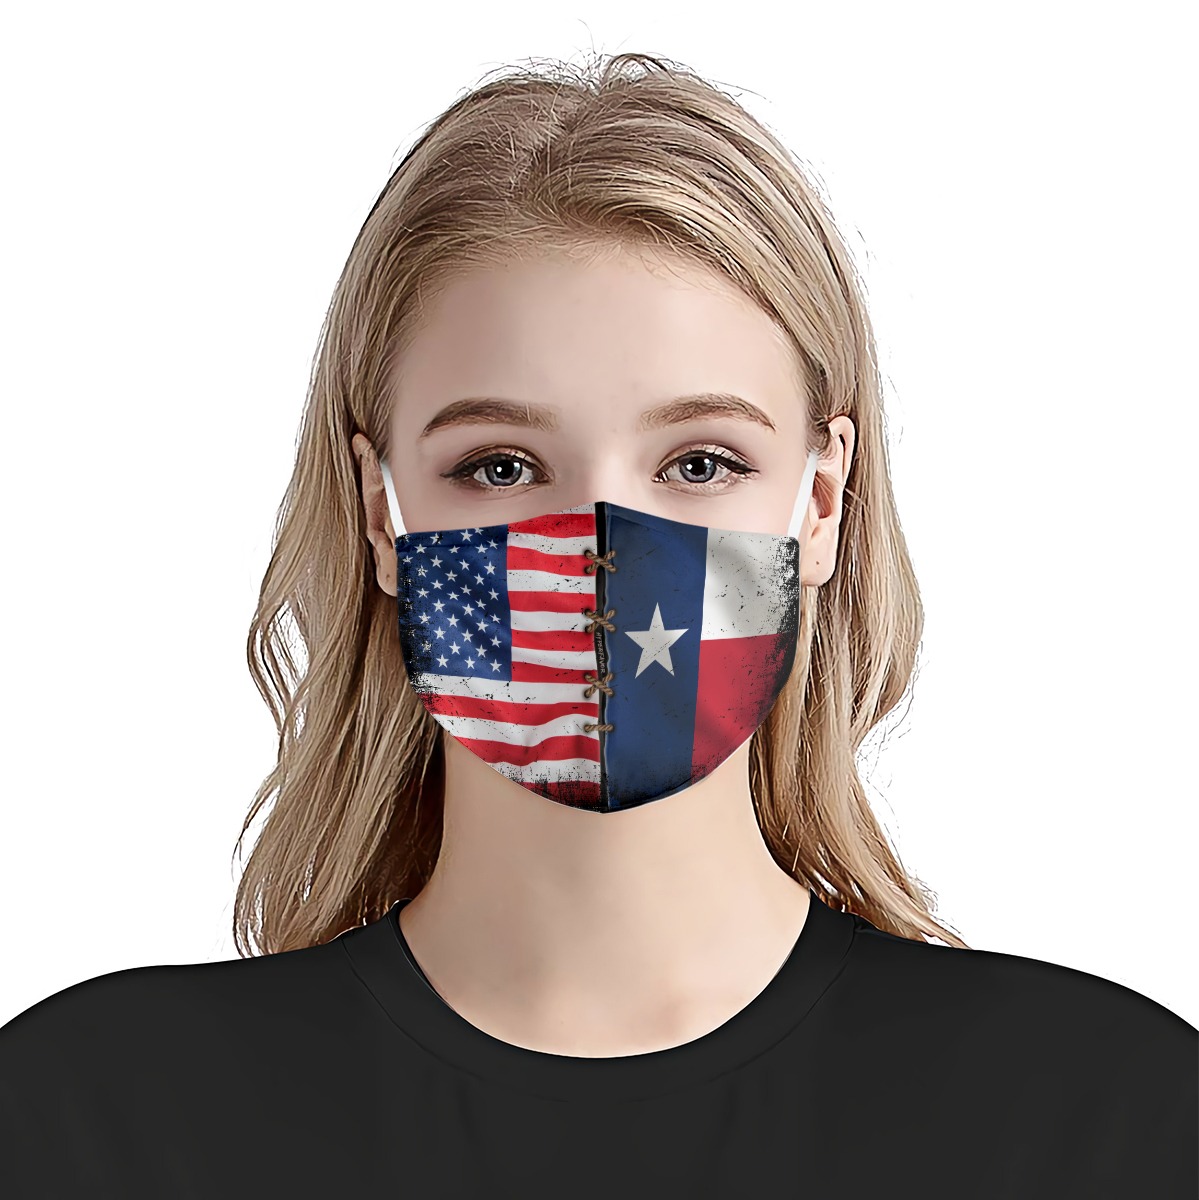 Texas American flag face mask